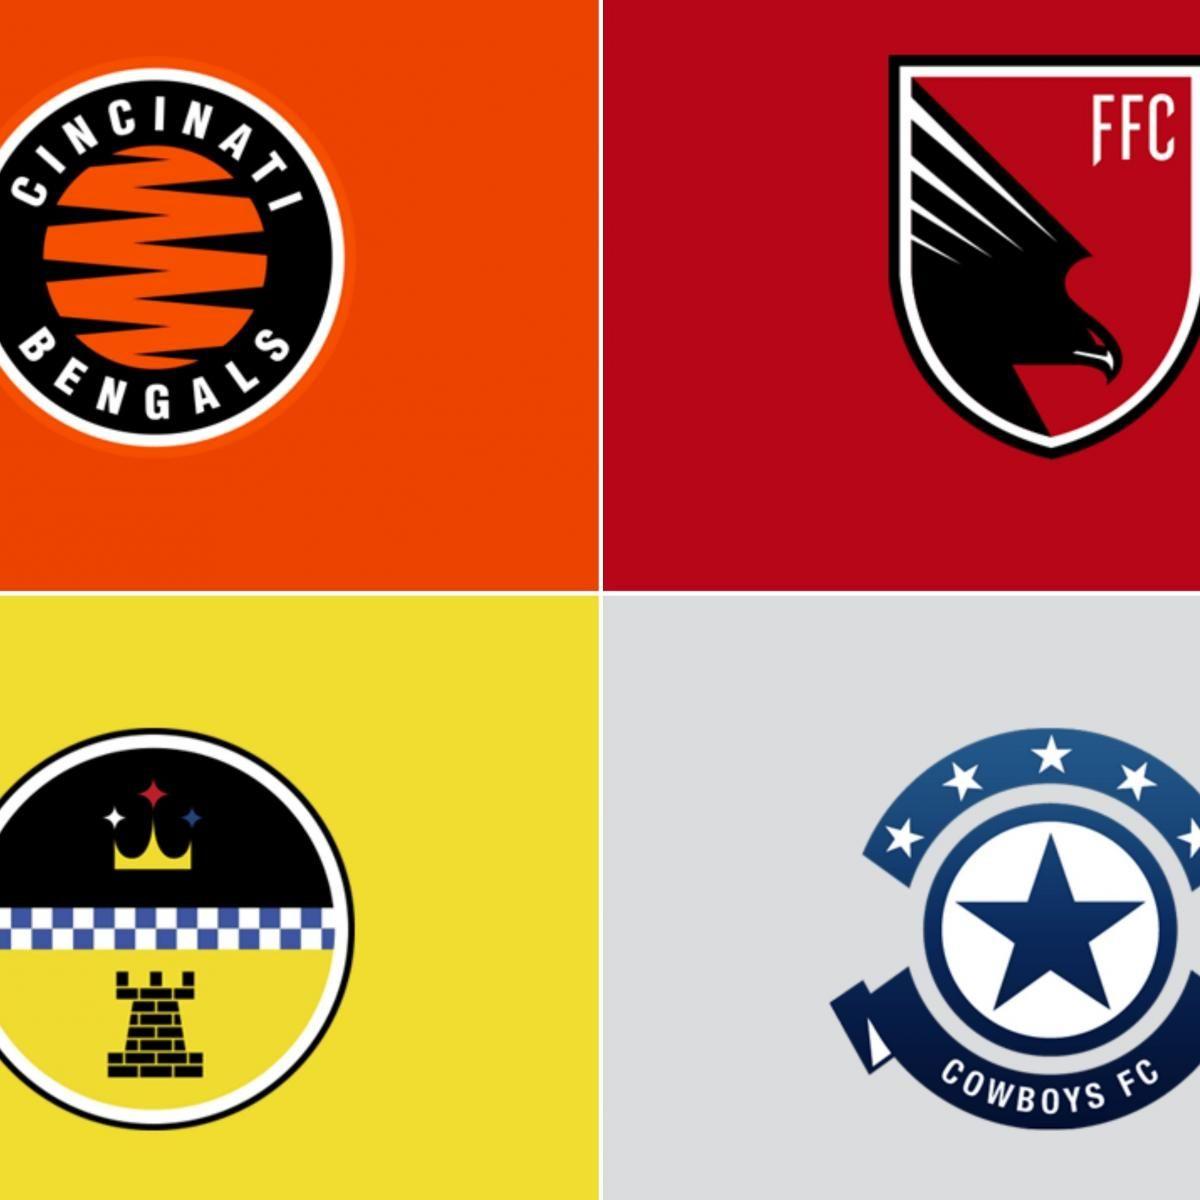 FFC Soccer Logo - NFL Logos Redesigned to Look Like European Football (Soccer) Logos